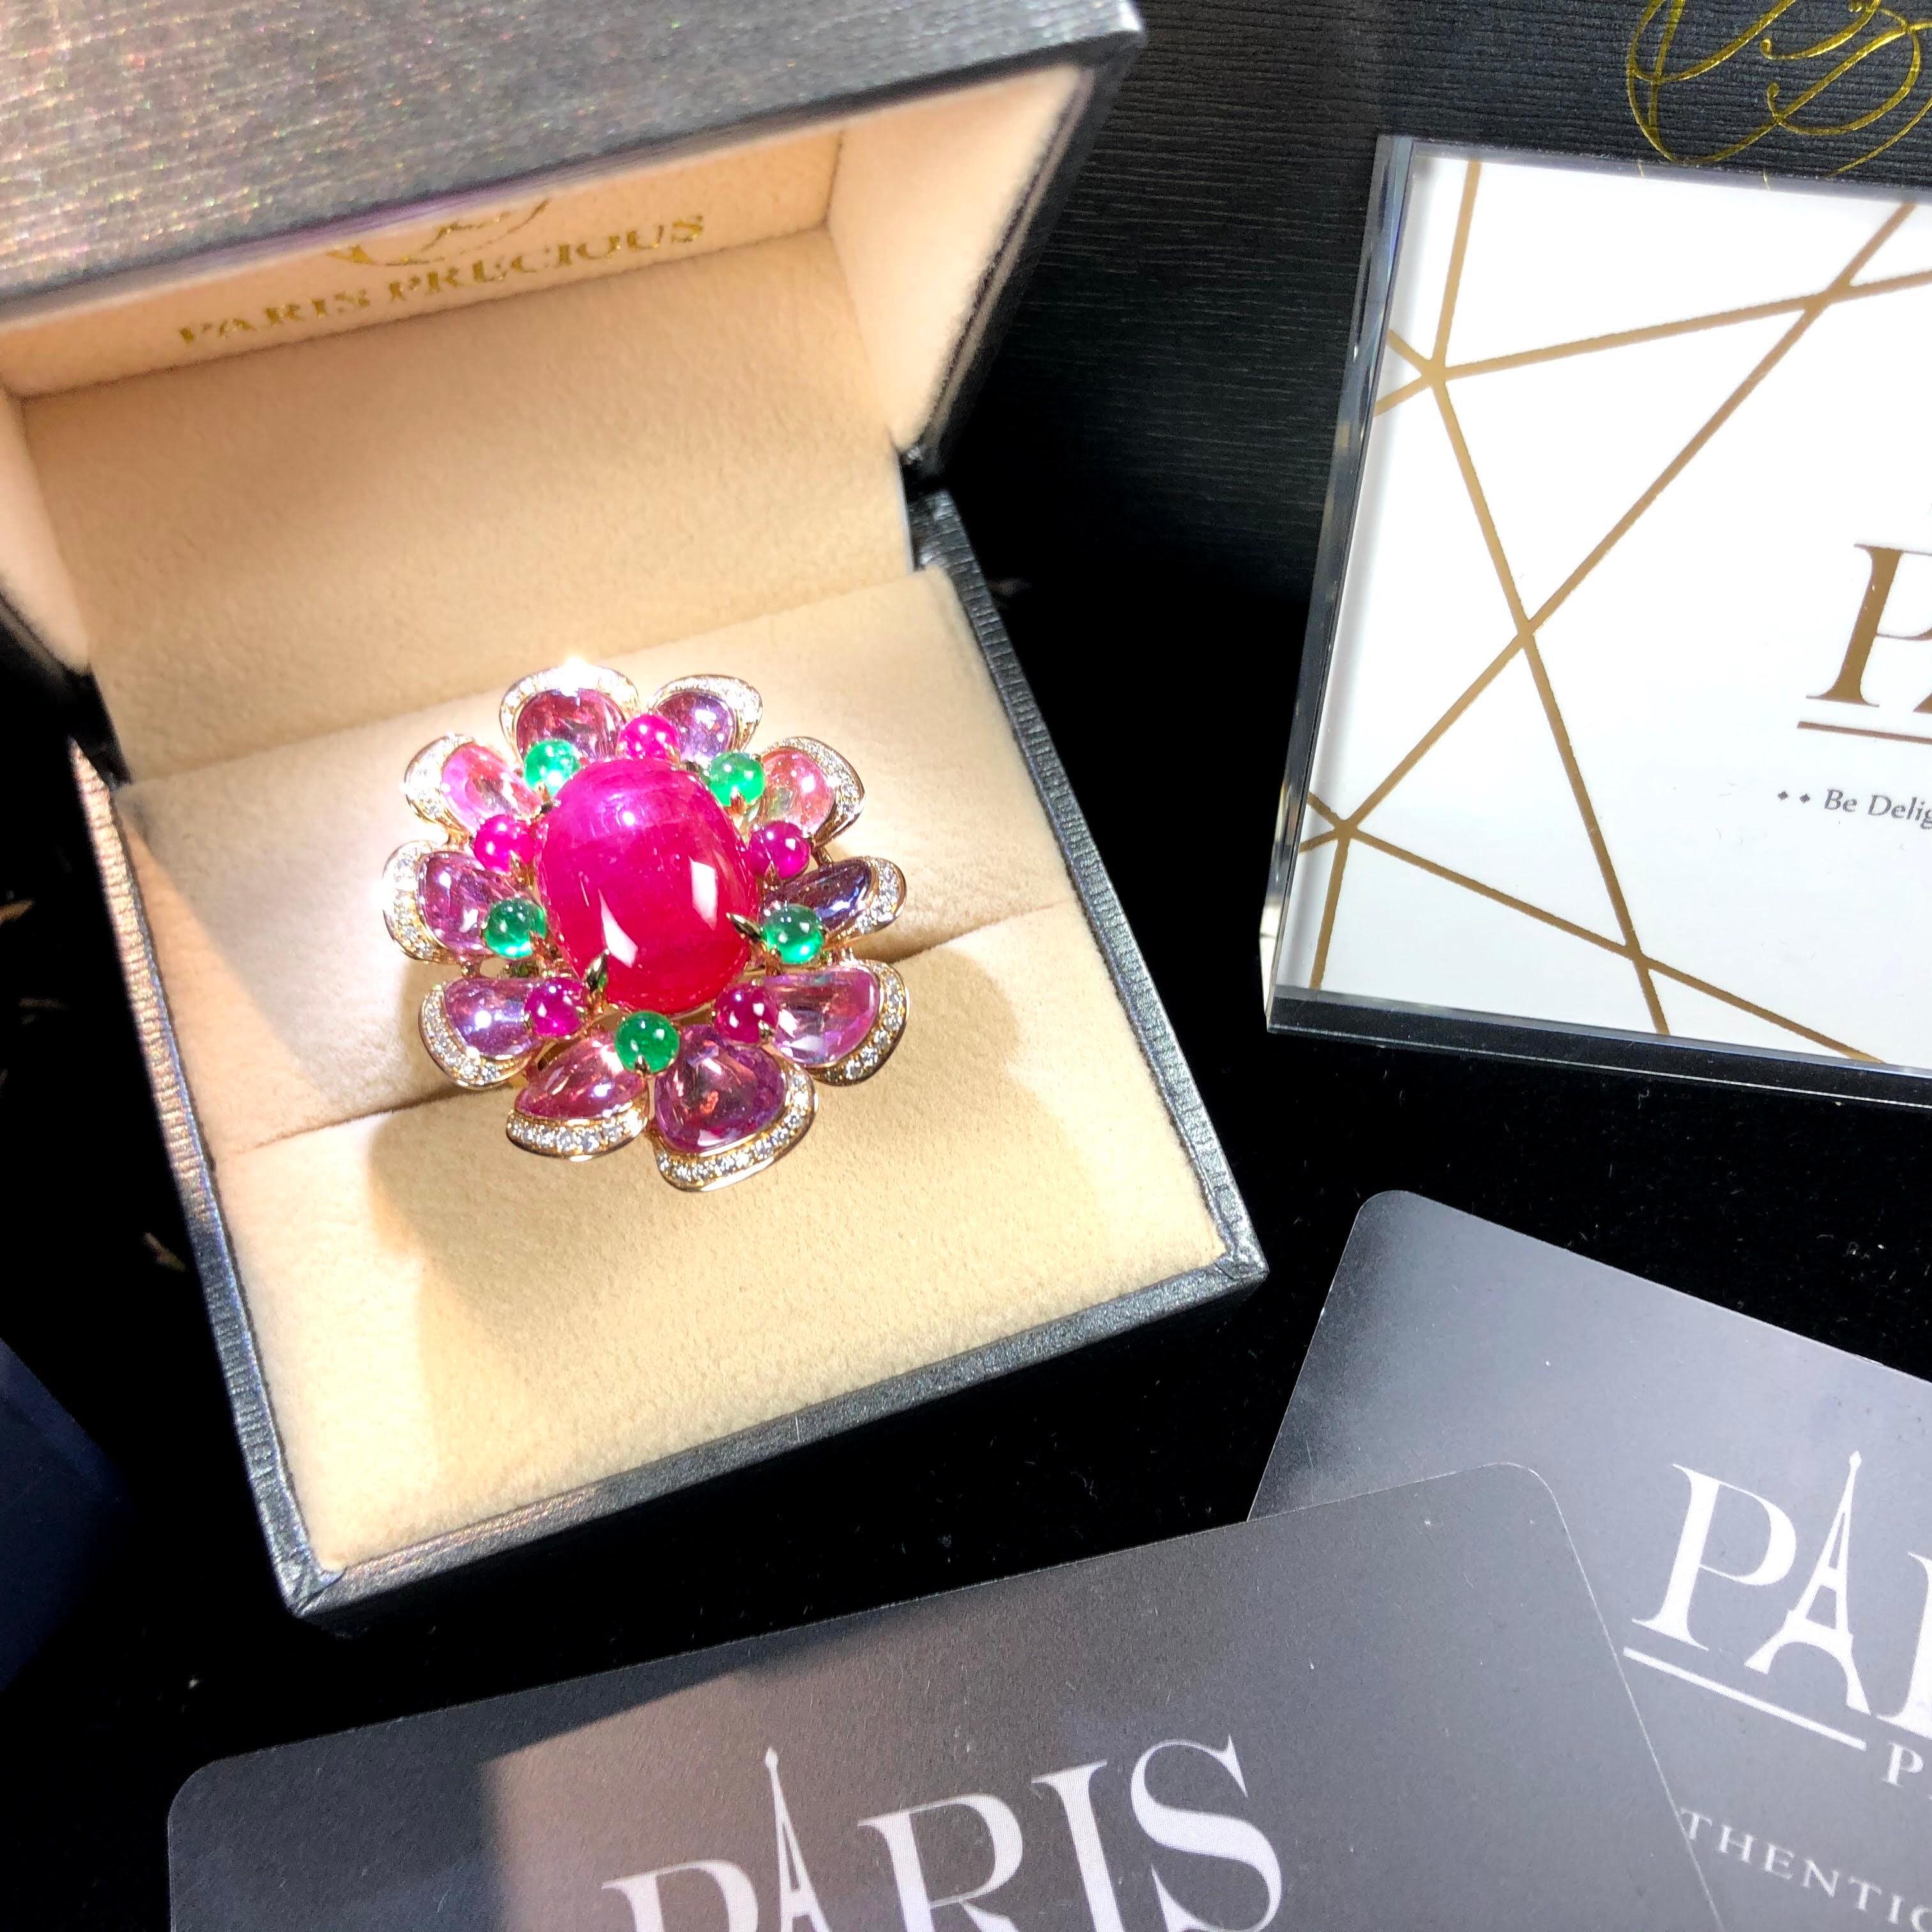 Paris Craft House 13.51 Carat Cabochon Ruby Sapphire Emerald Diamond Flower Ring For Sale 2